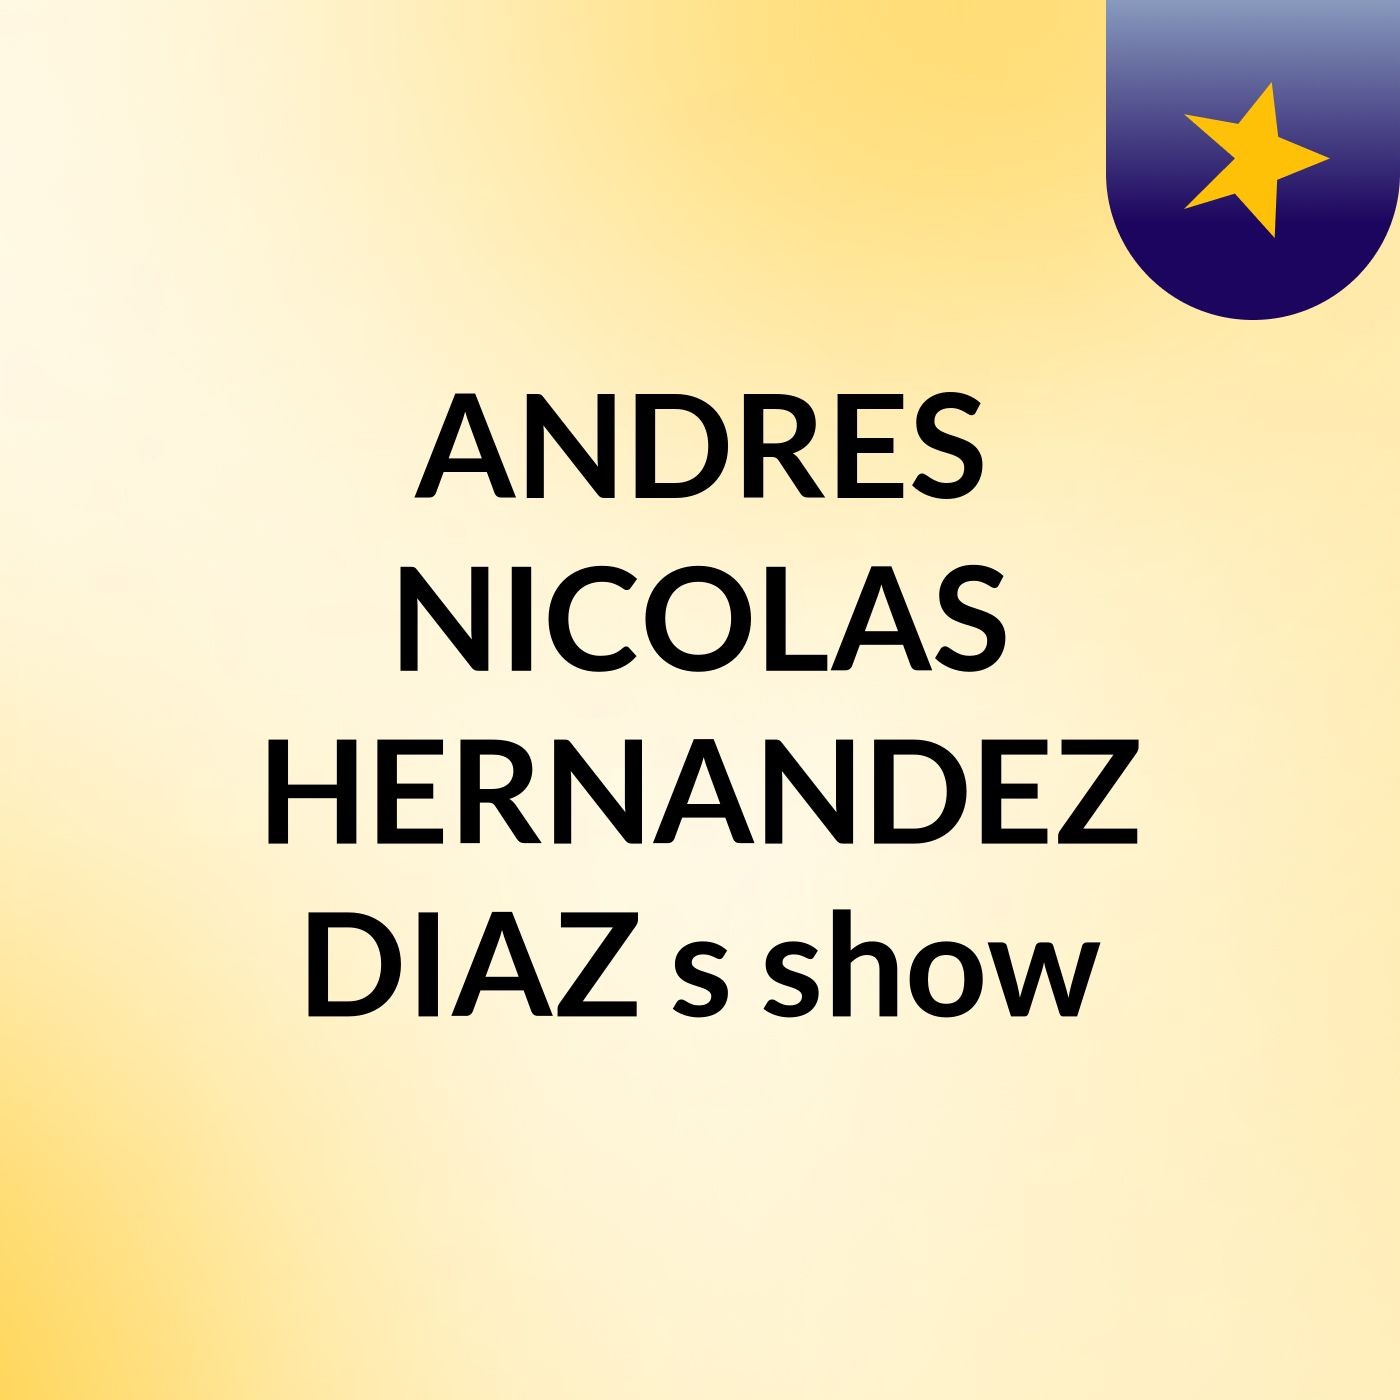 ANDRES NICOLAS HERNANDEZ DIAZ's show